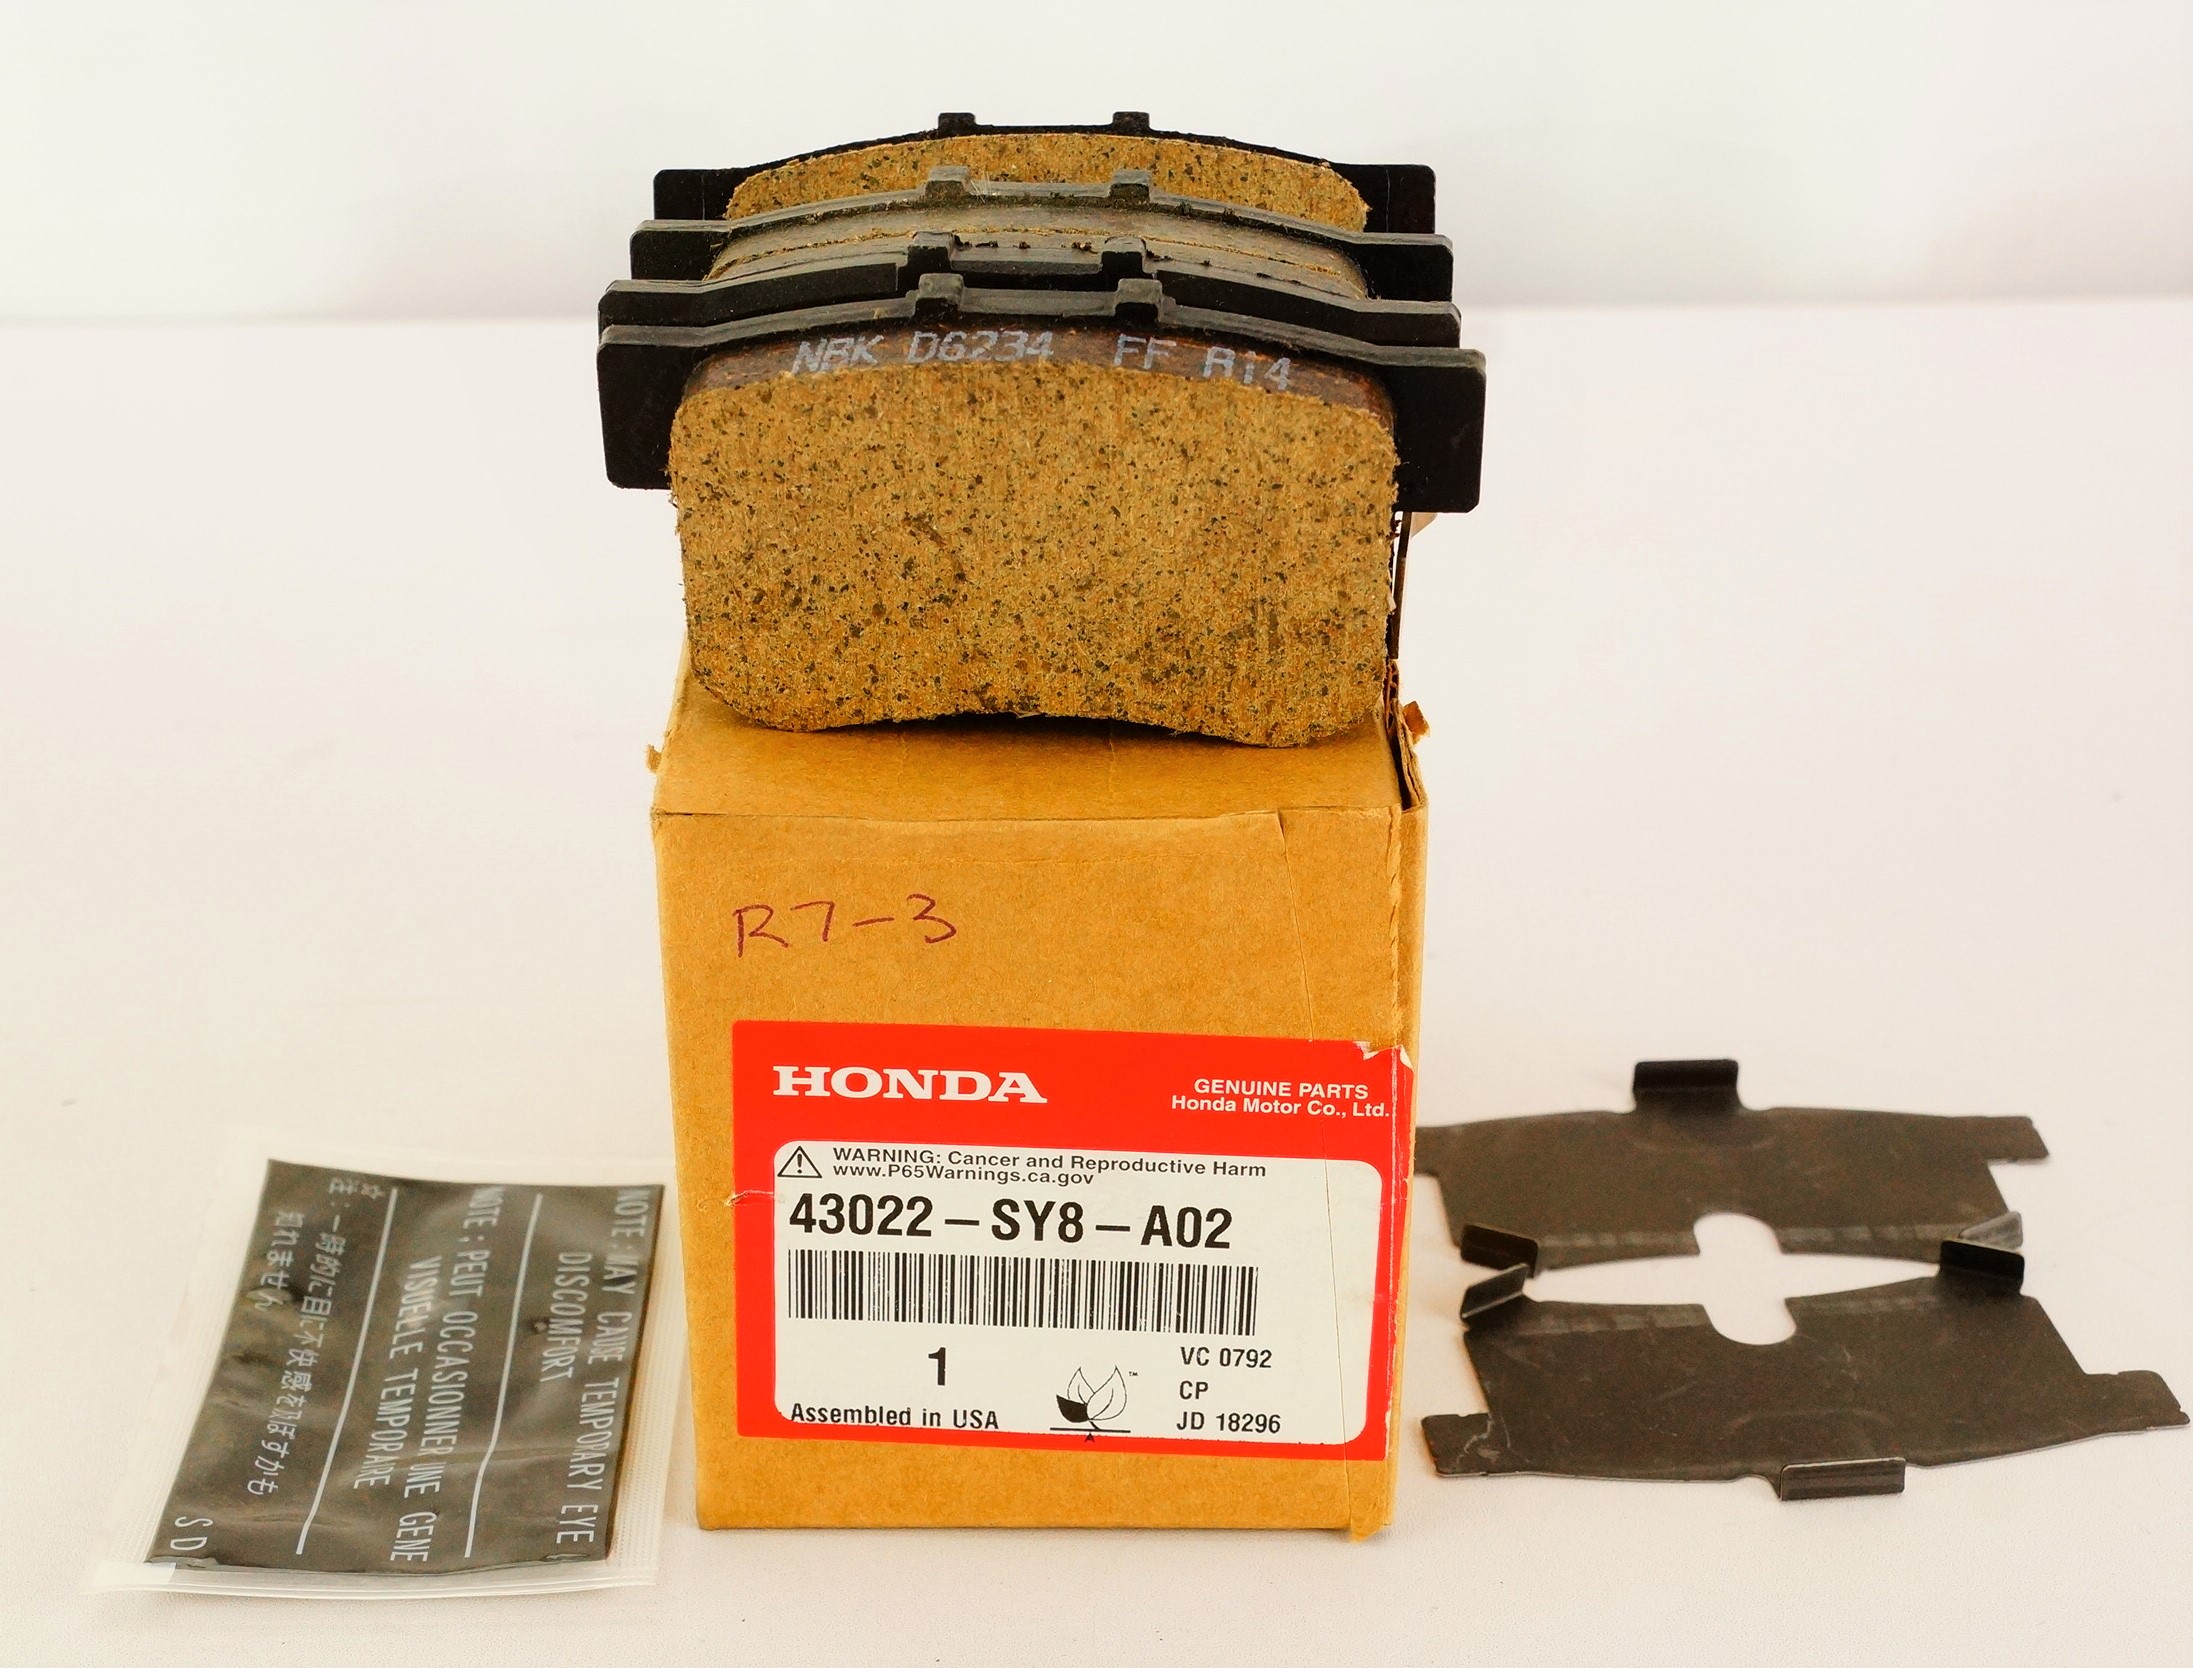 Genuine OEM 43022-SY8-A02 Honda Rear Brake Pads 1996-02 Accord Free Shipping - image 1